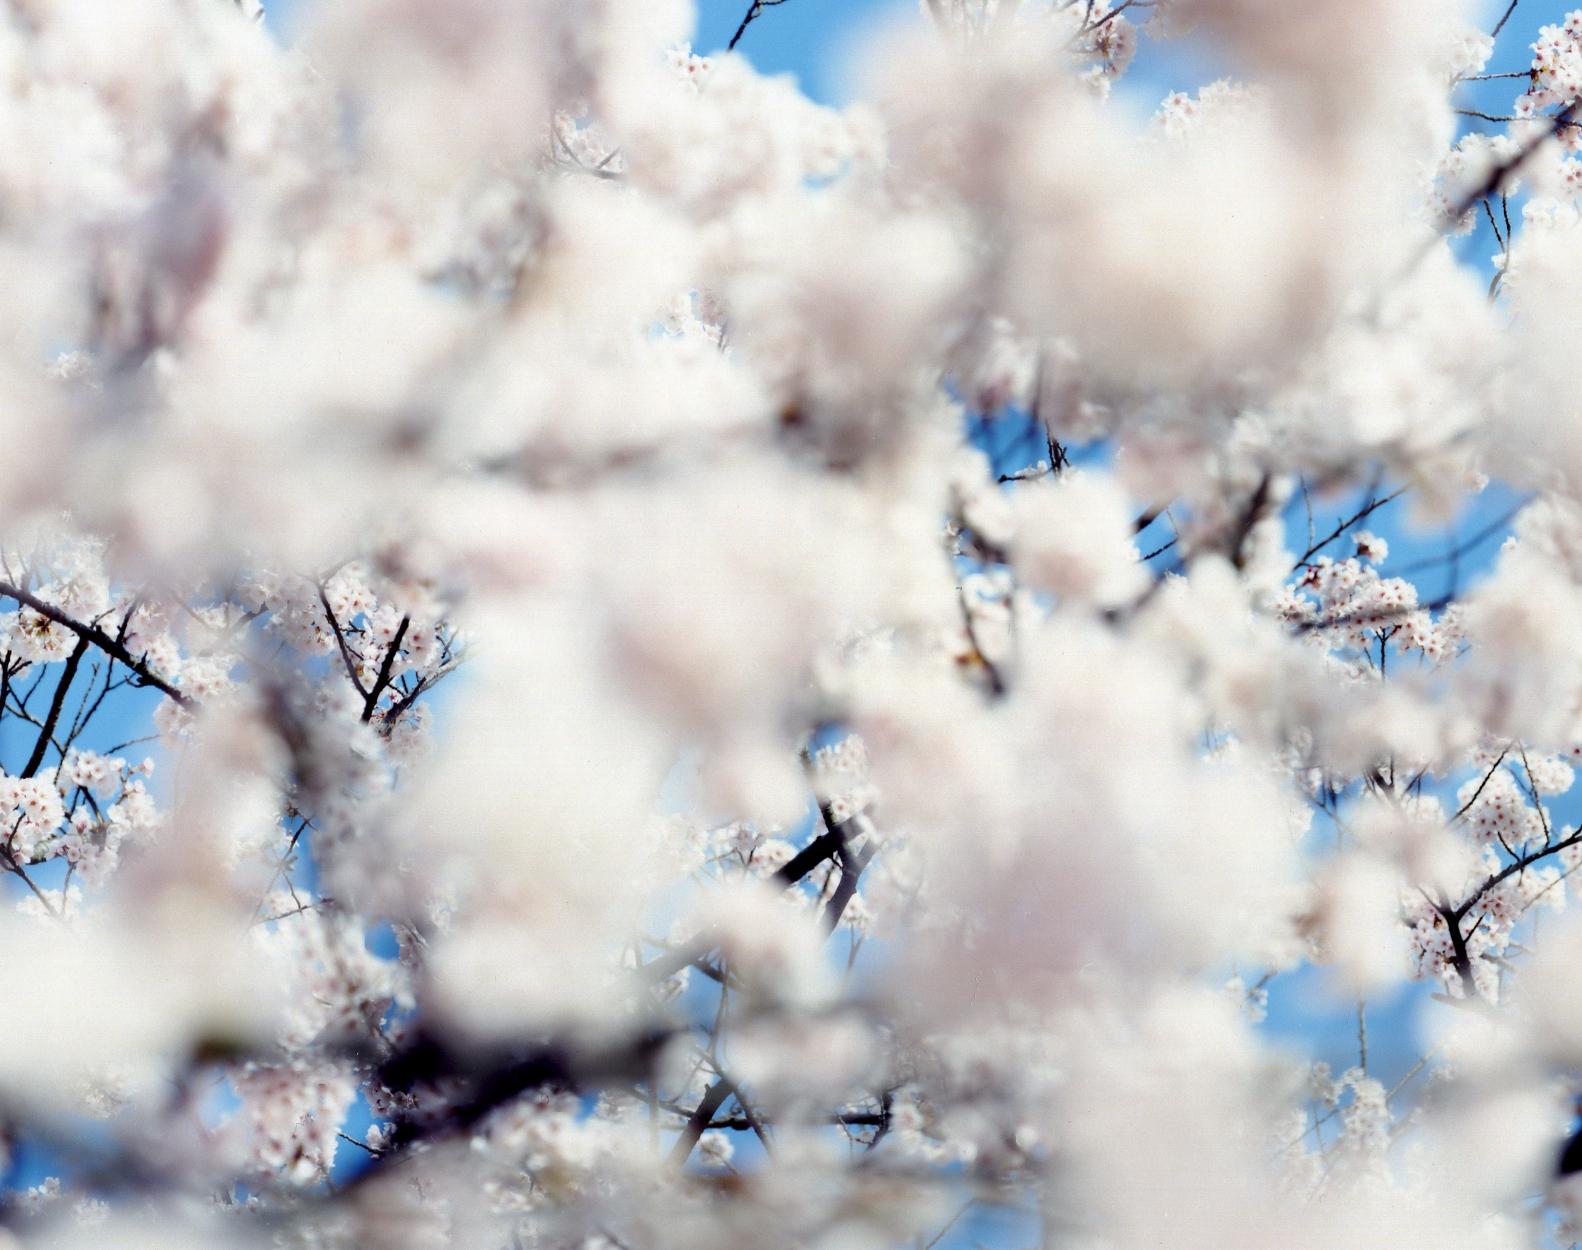 RISAKU SUZUKI (*1963, Japan)
SAKURA 07,S-49
2007
Chromogenic print
Sheet 120 x 150 cm (47 1/4 x 59 1/8 in.)
Edition of 5; Ed. no. 1/5
Framed

The Sakura (Japanese term for ‘cherry blossoms’) Celebration commences in early spring and has inspired